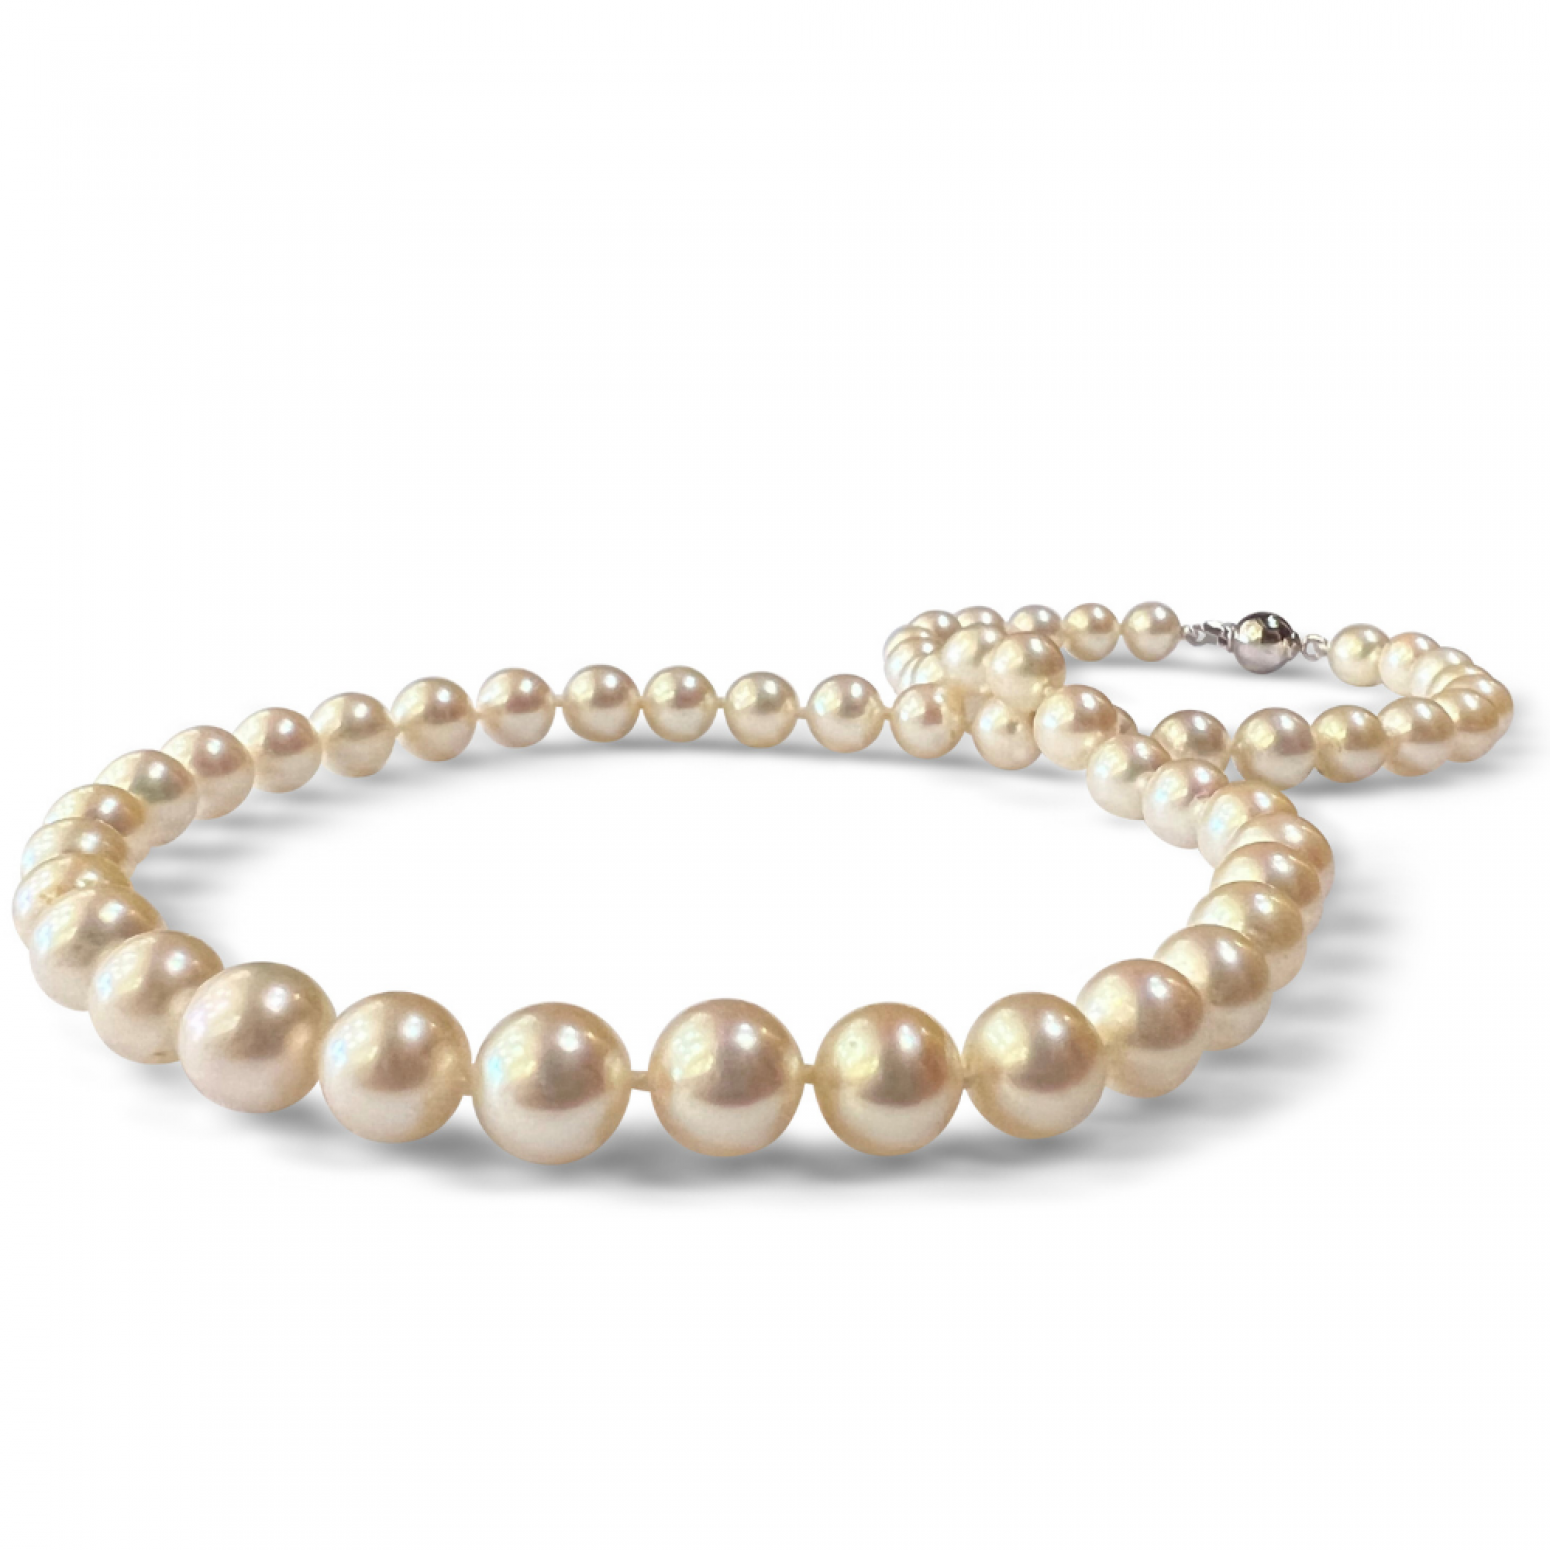 Necklace with white sea pearls Κ14, Akoya Japan, 7.50mm - 8.00mm ko5507 NECKLACES Κοσμηματα - chrilia.gr